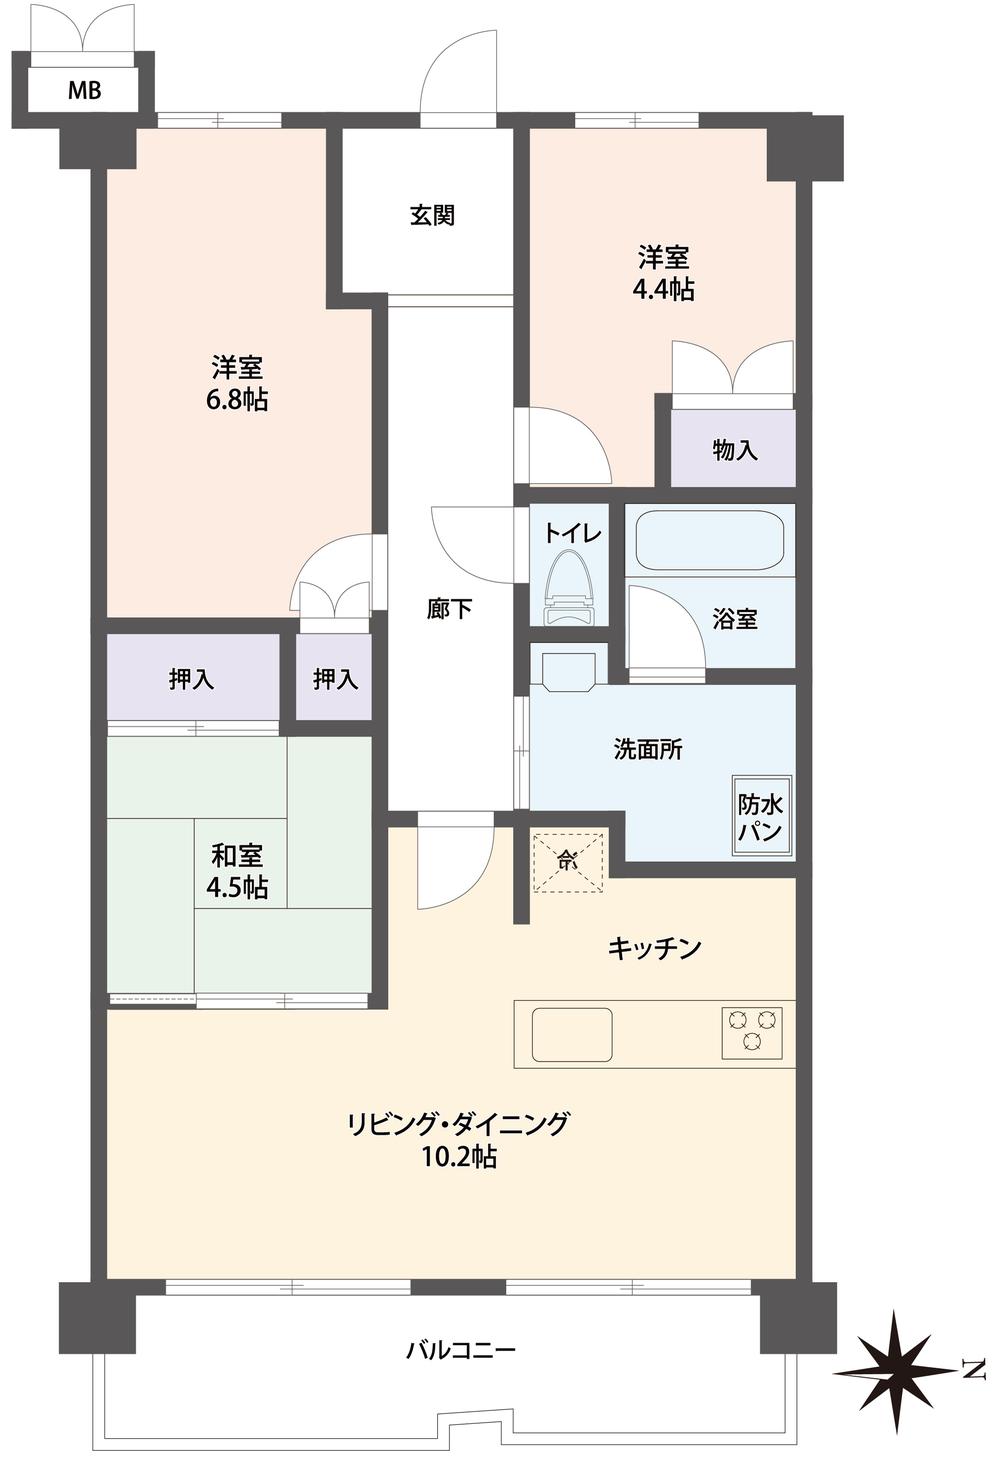 Floor plan. 3LDK, Price 15.7 million yen, Occupied area 62.92 sq m , Balcony area 8.4 sq m fully renovated